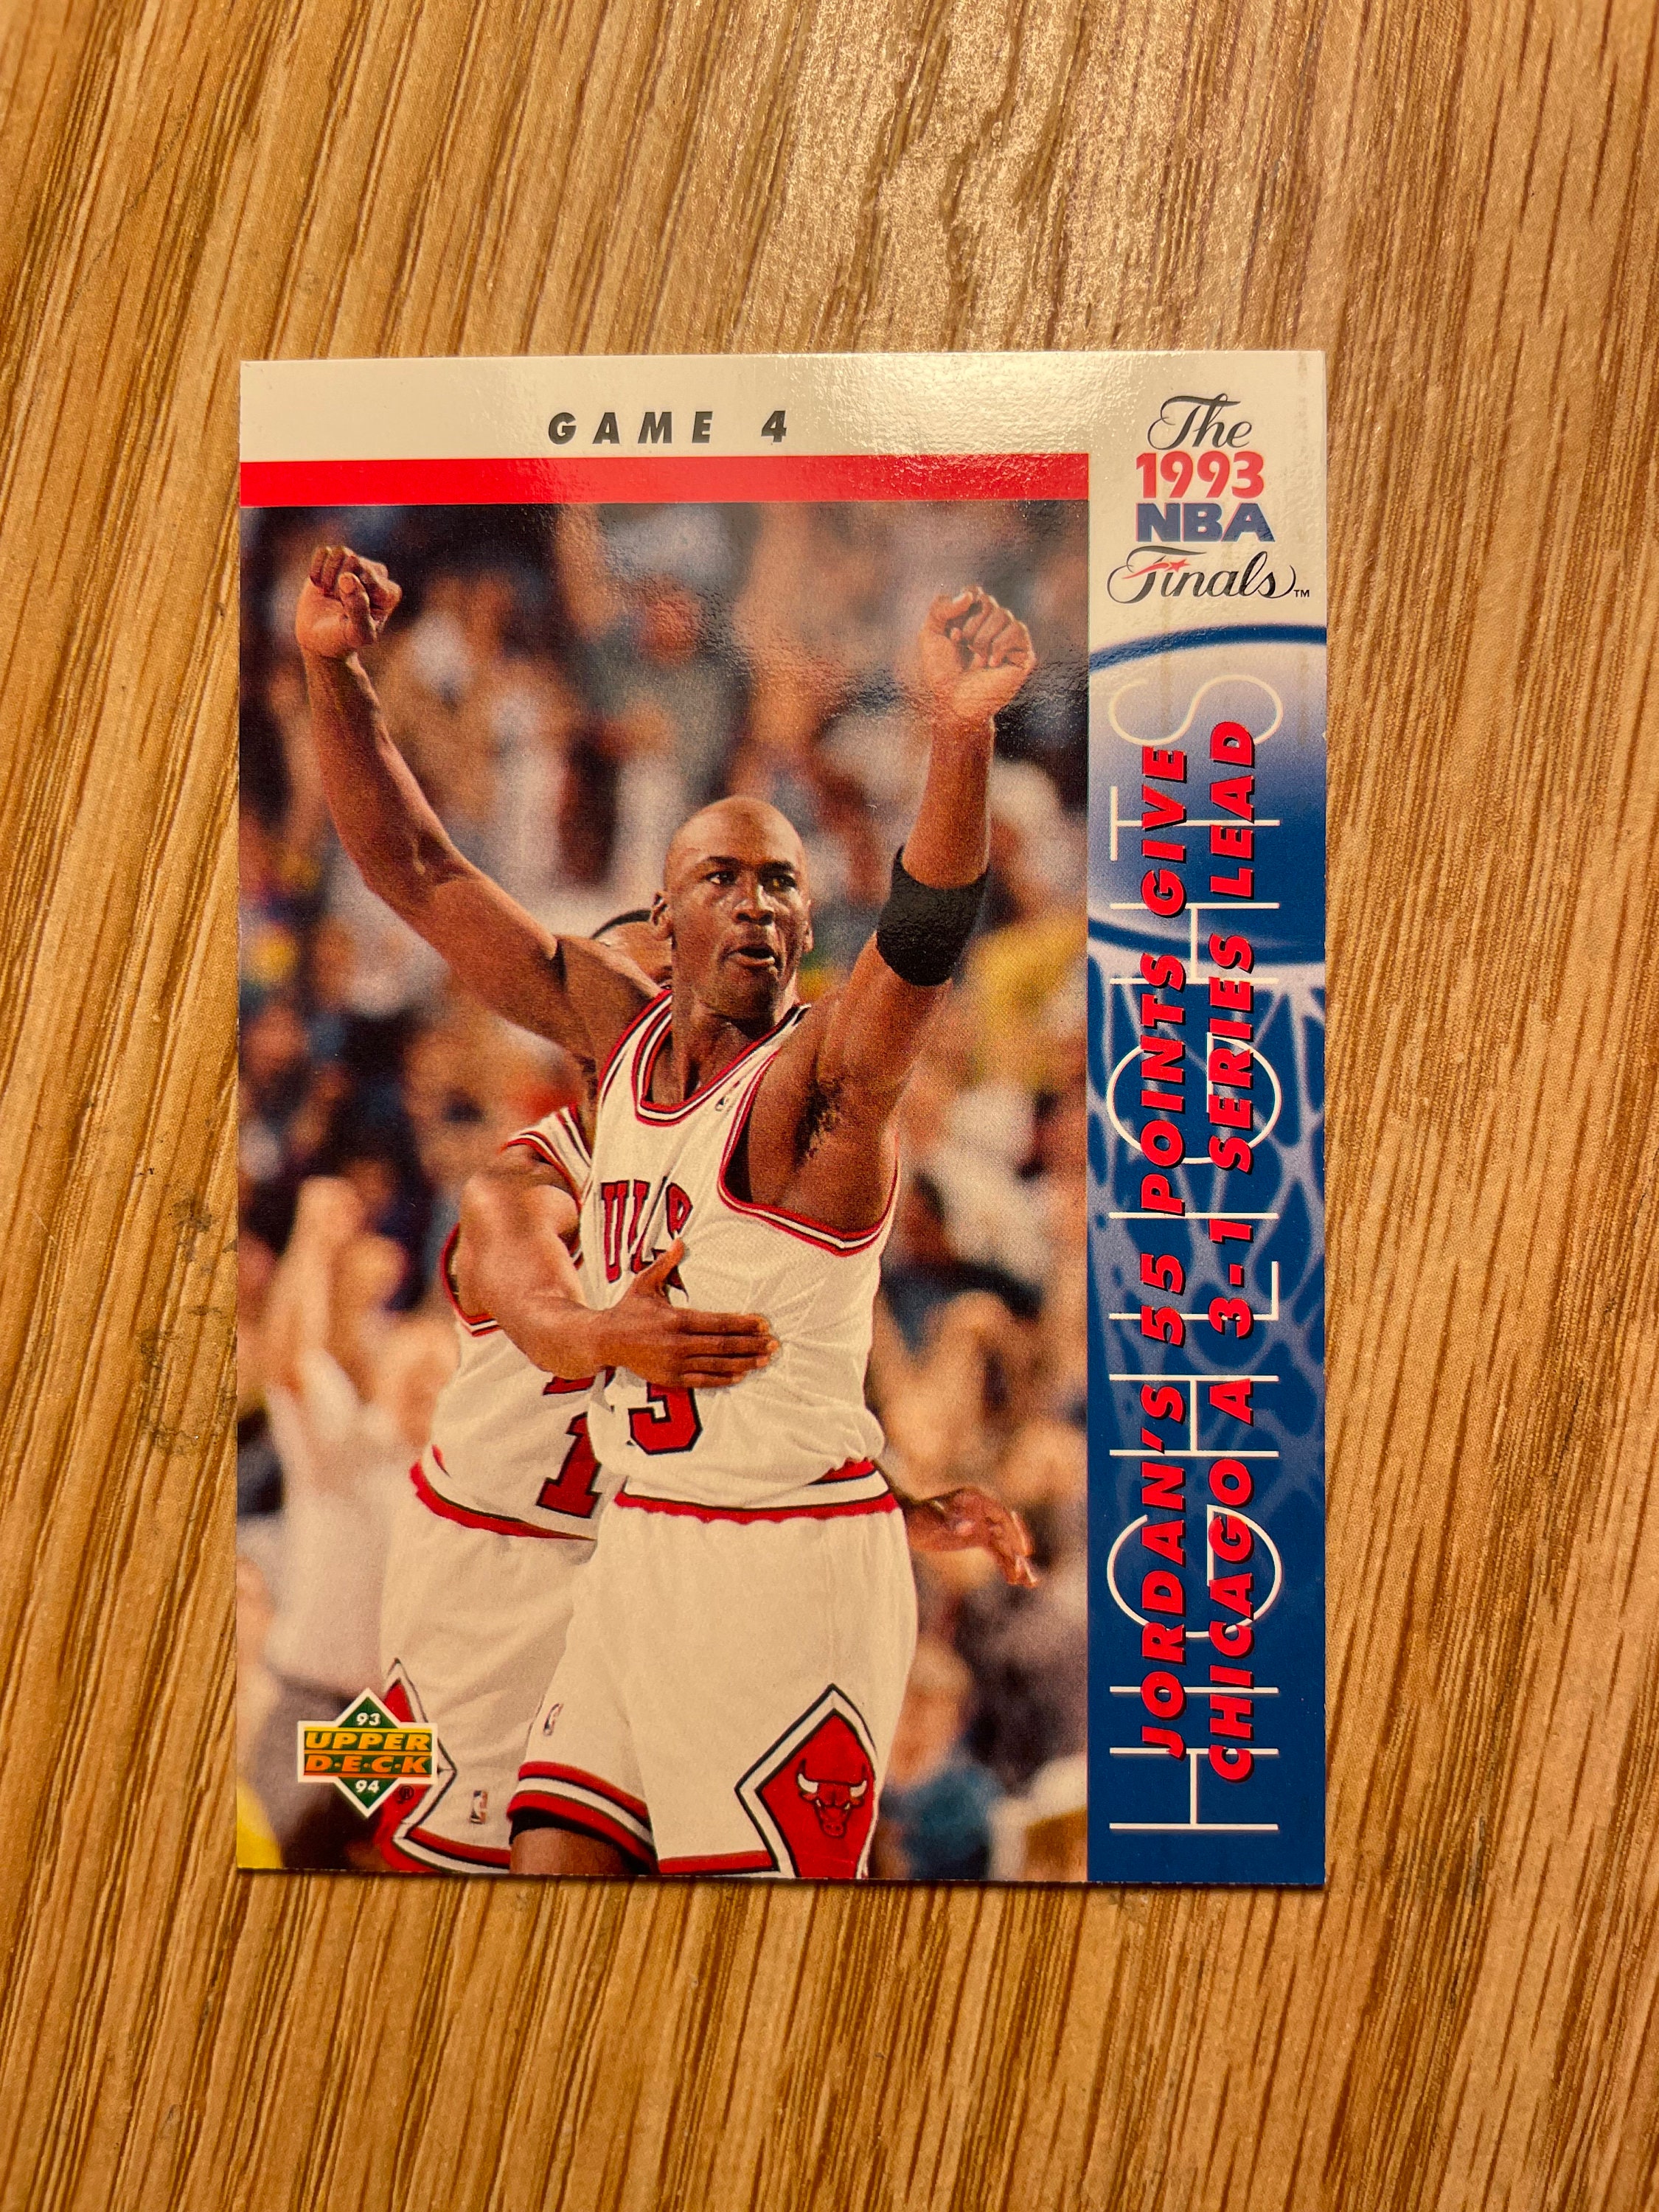 MICHAEL JORDAN 1993 UPPER DECK NBA TRADING CARD NBA PLAYOFF